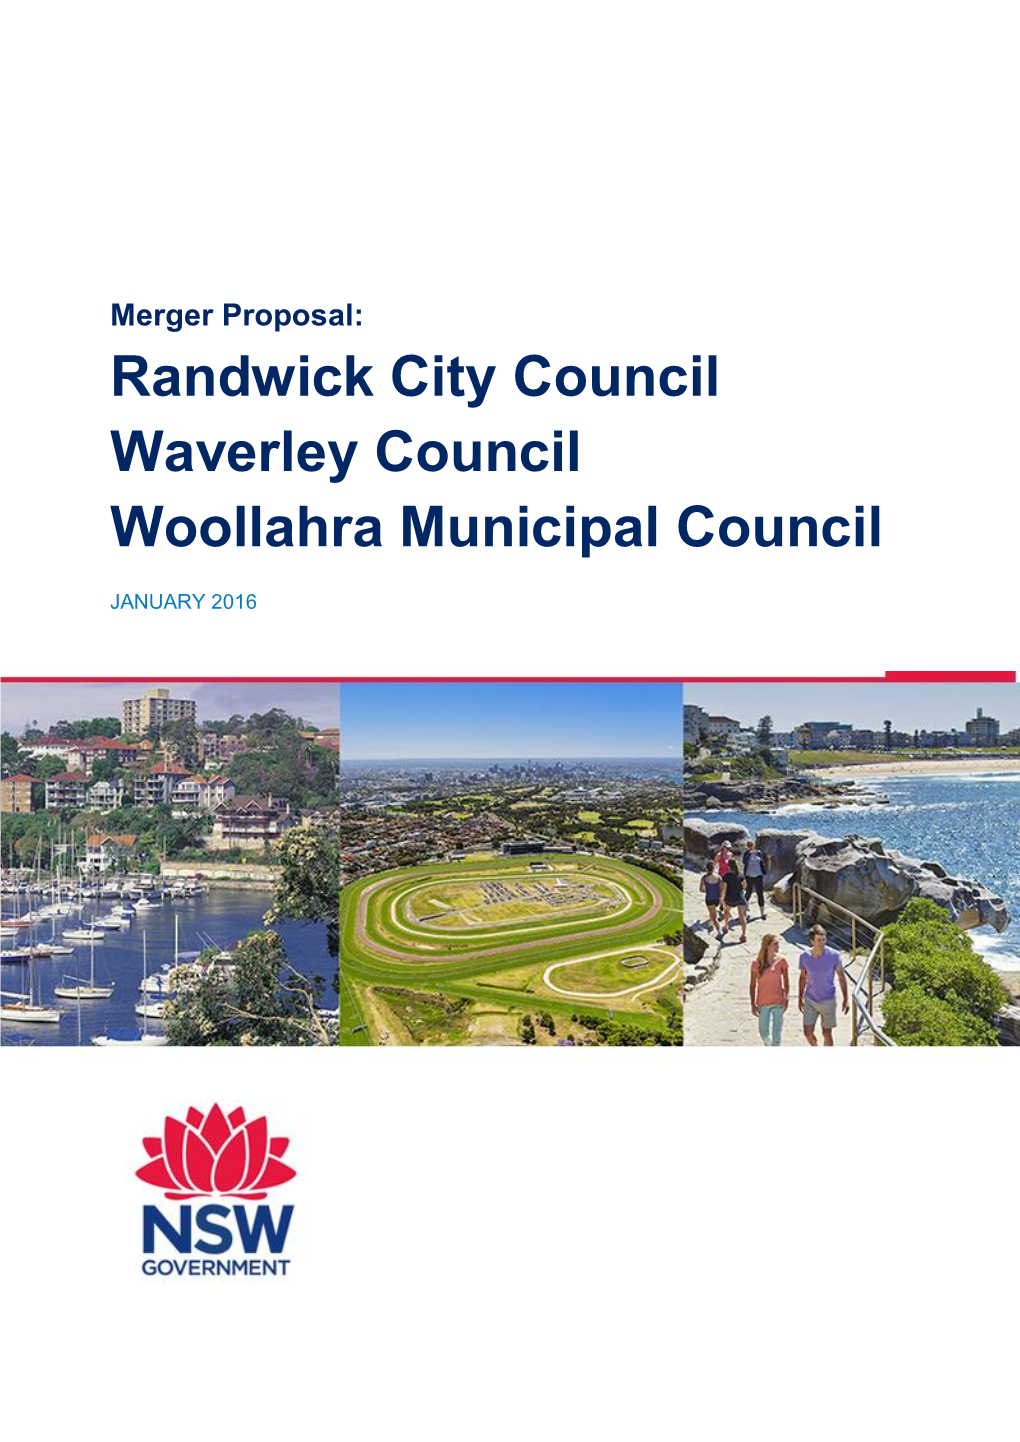 Merger Proposal: Randwick City Council Waverley Council Woollahra Municipal Council